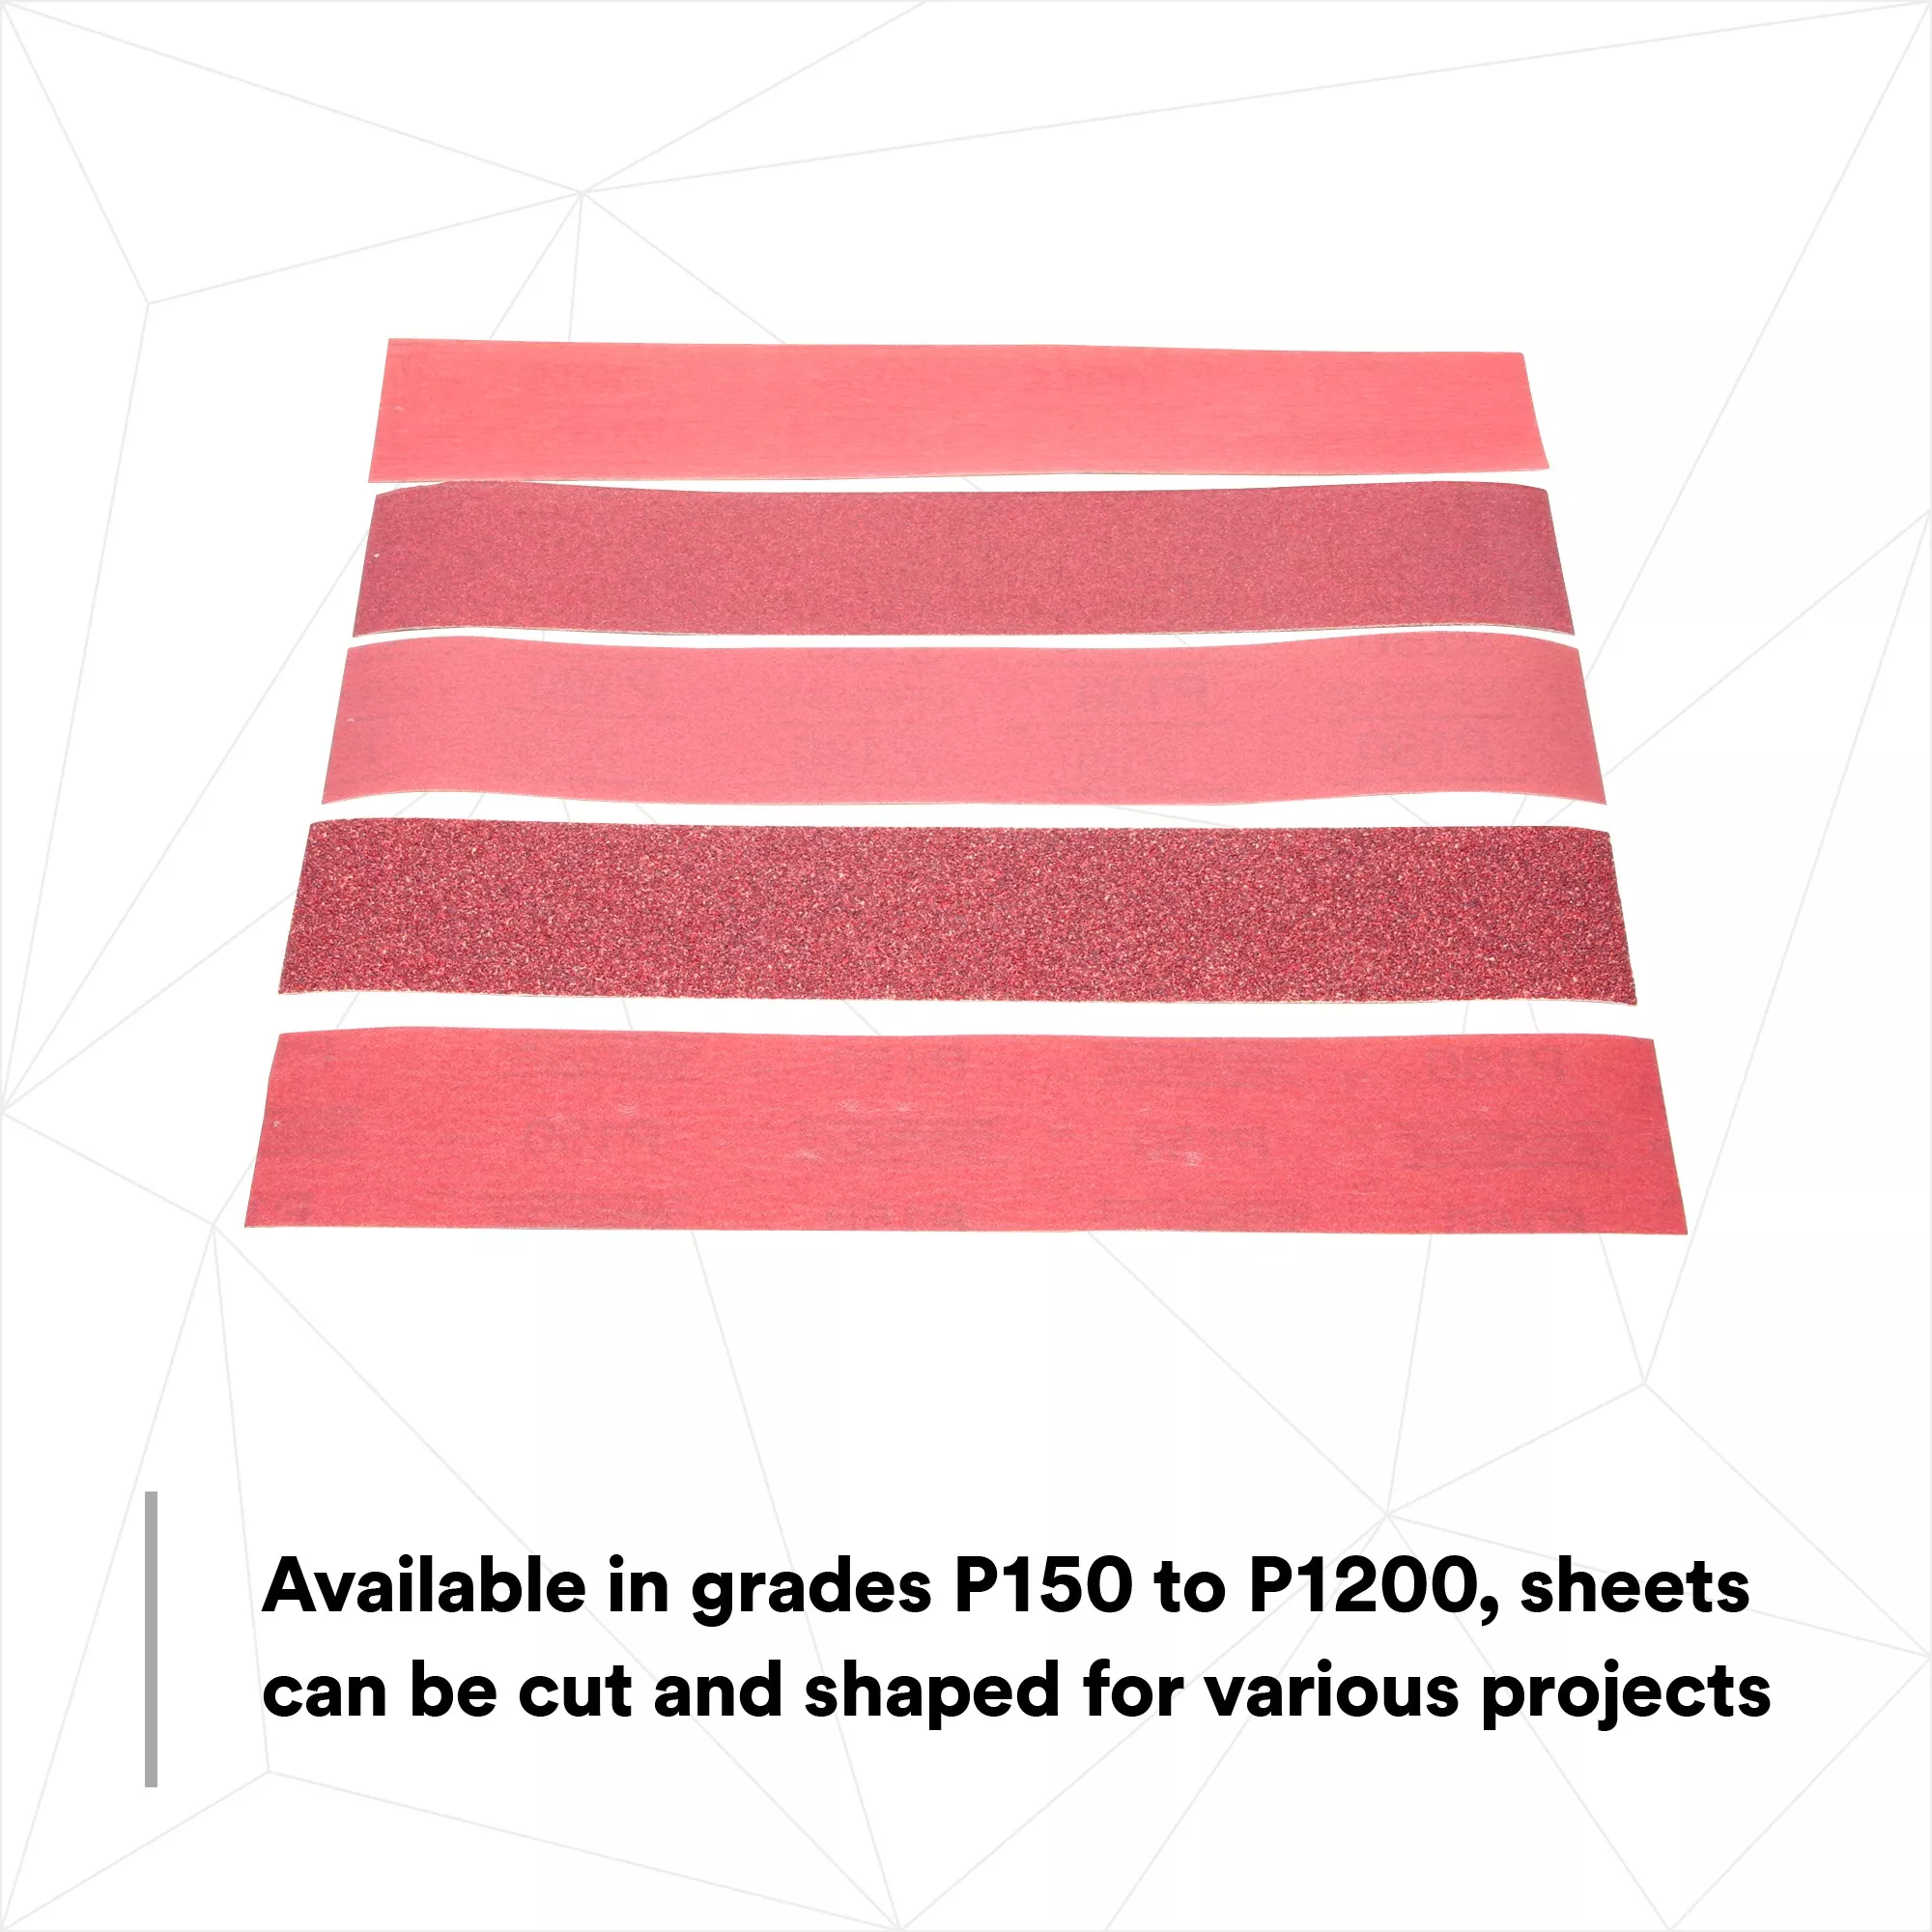 Product Number 316U | 3M™ Red Abrasive Stikit™ Sheet Roll